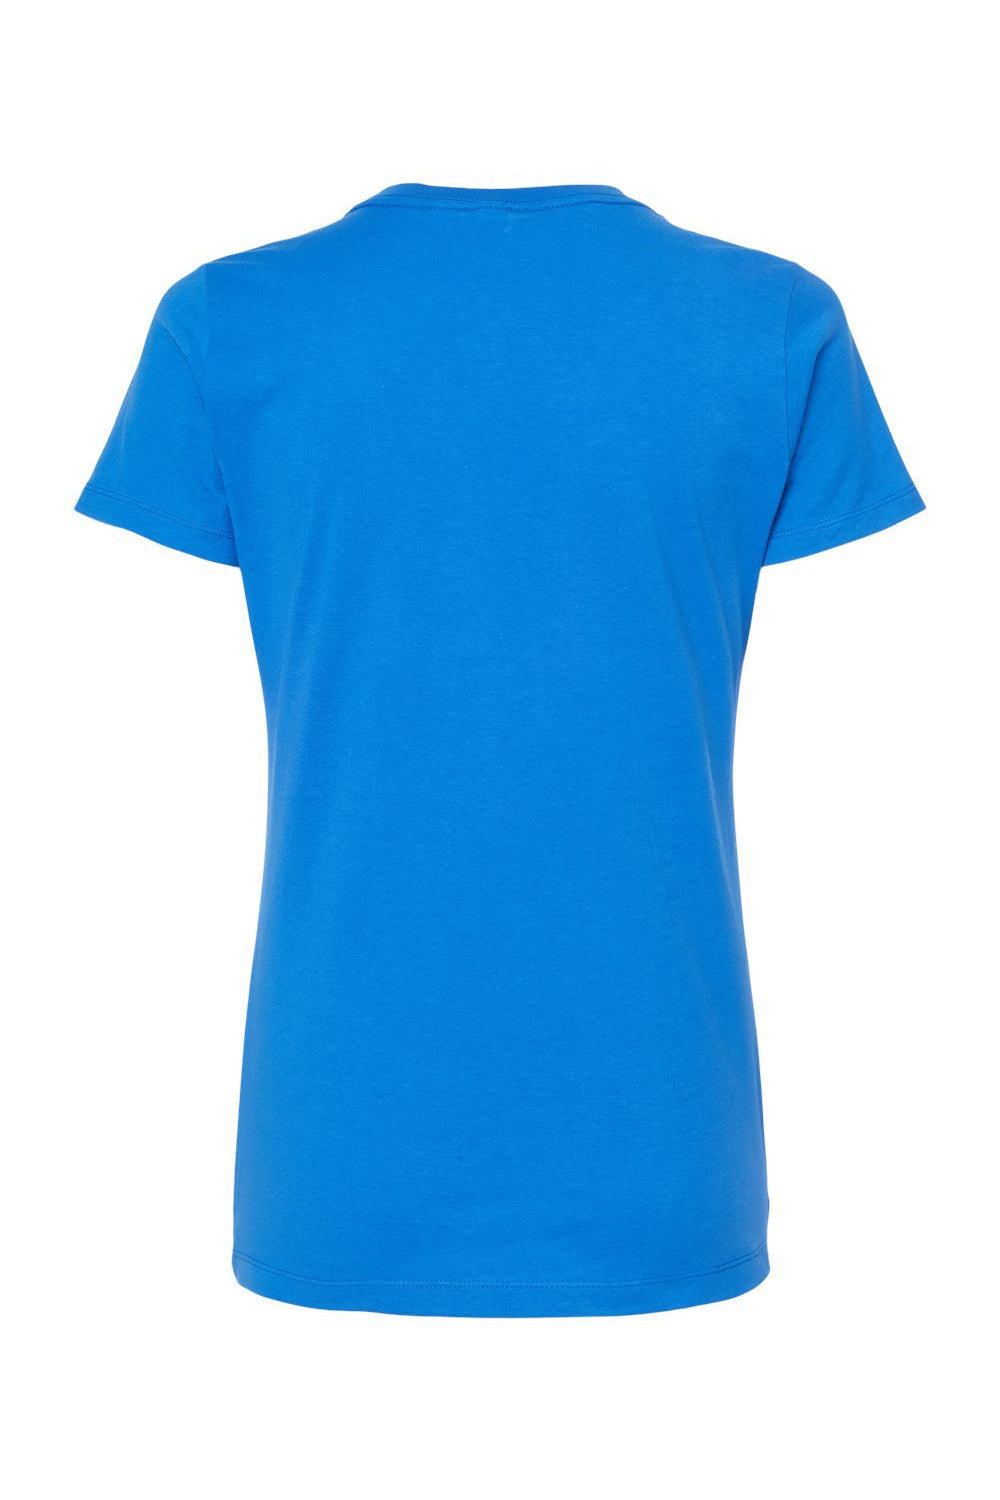 Tultex 516 Womens Premium Short Sleeve Crewneck T-Shirt Royal Blue Flat Back